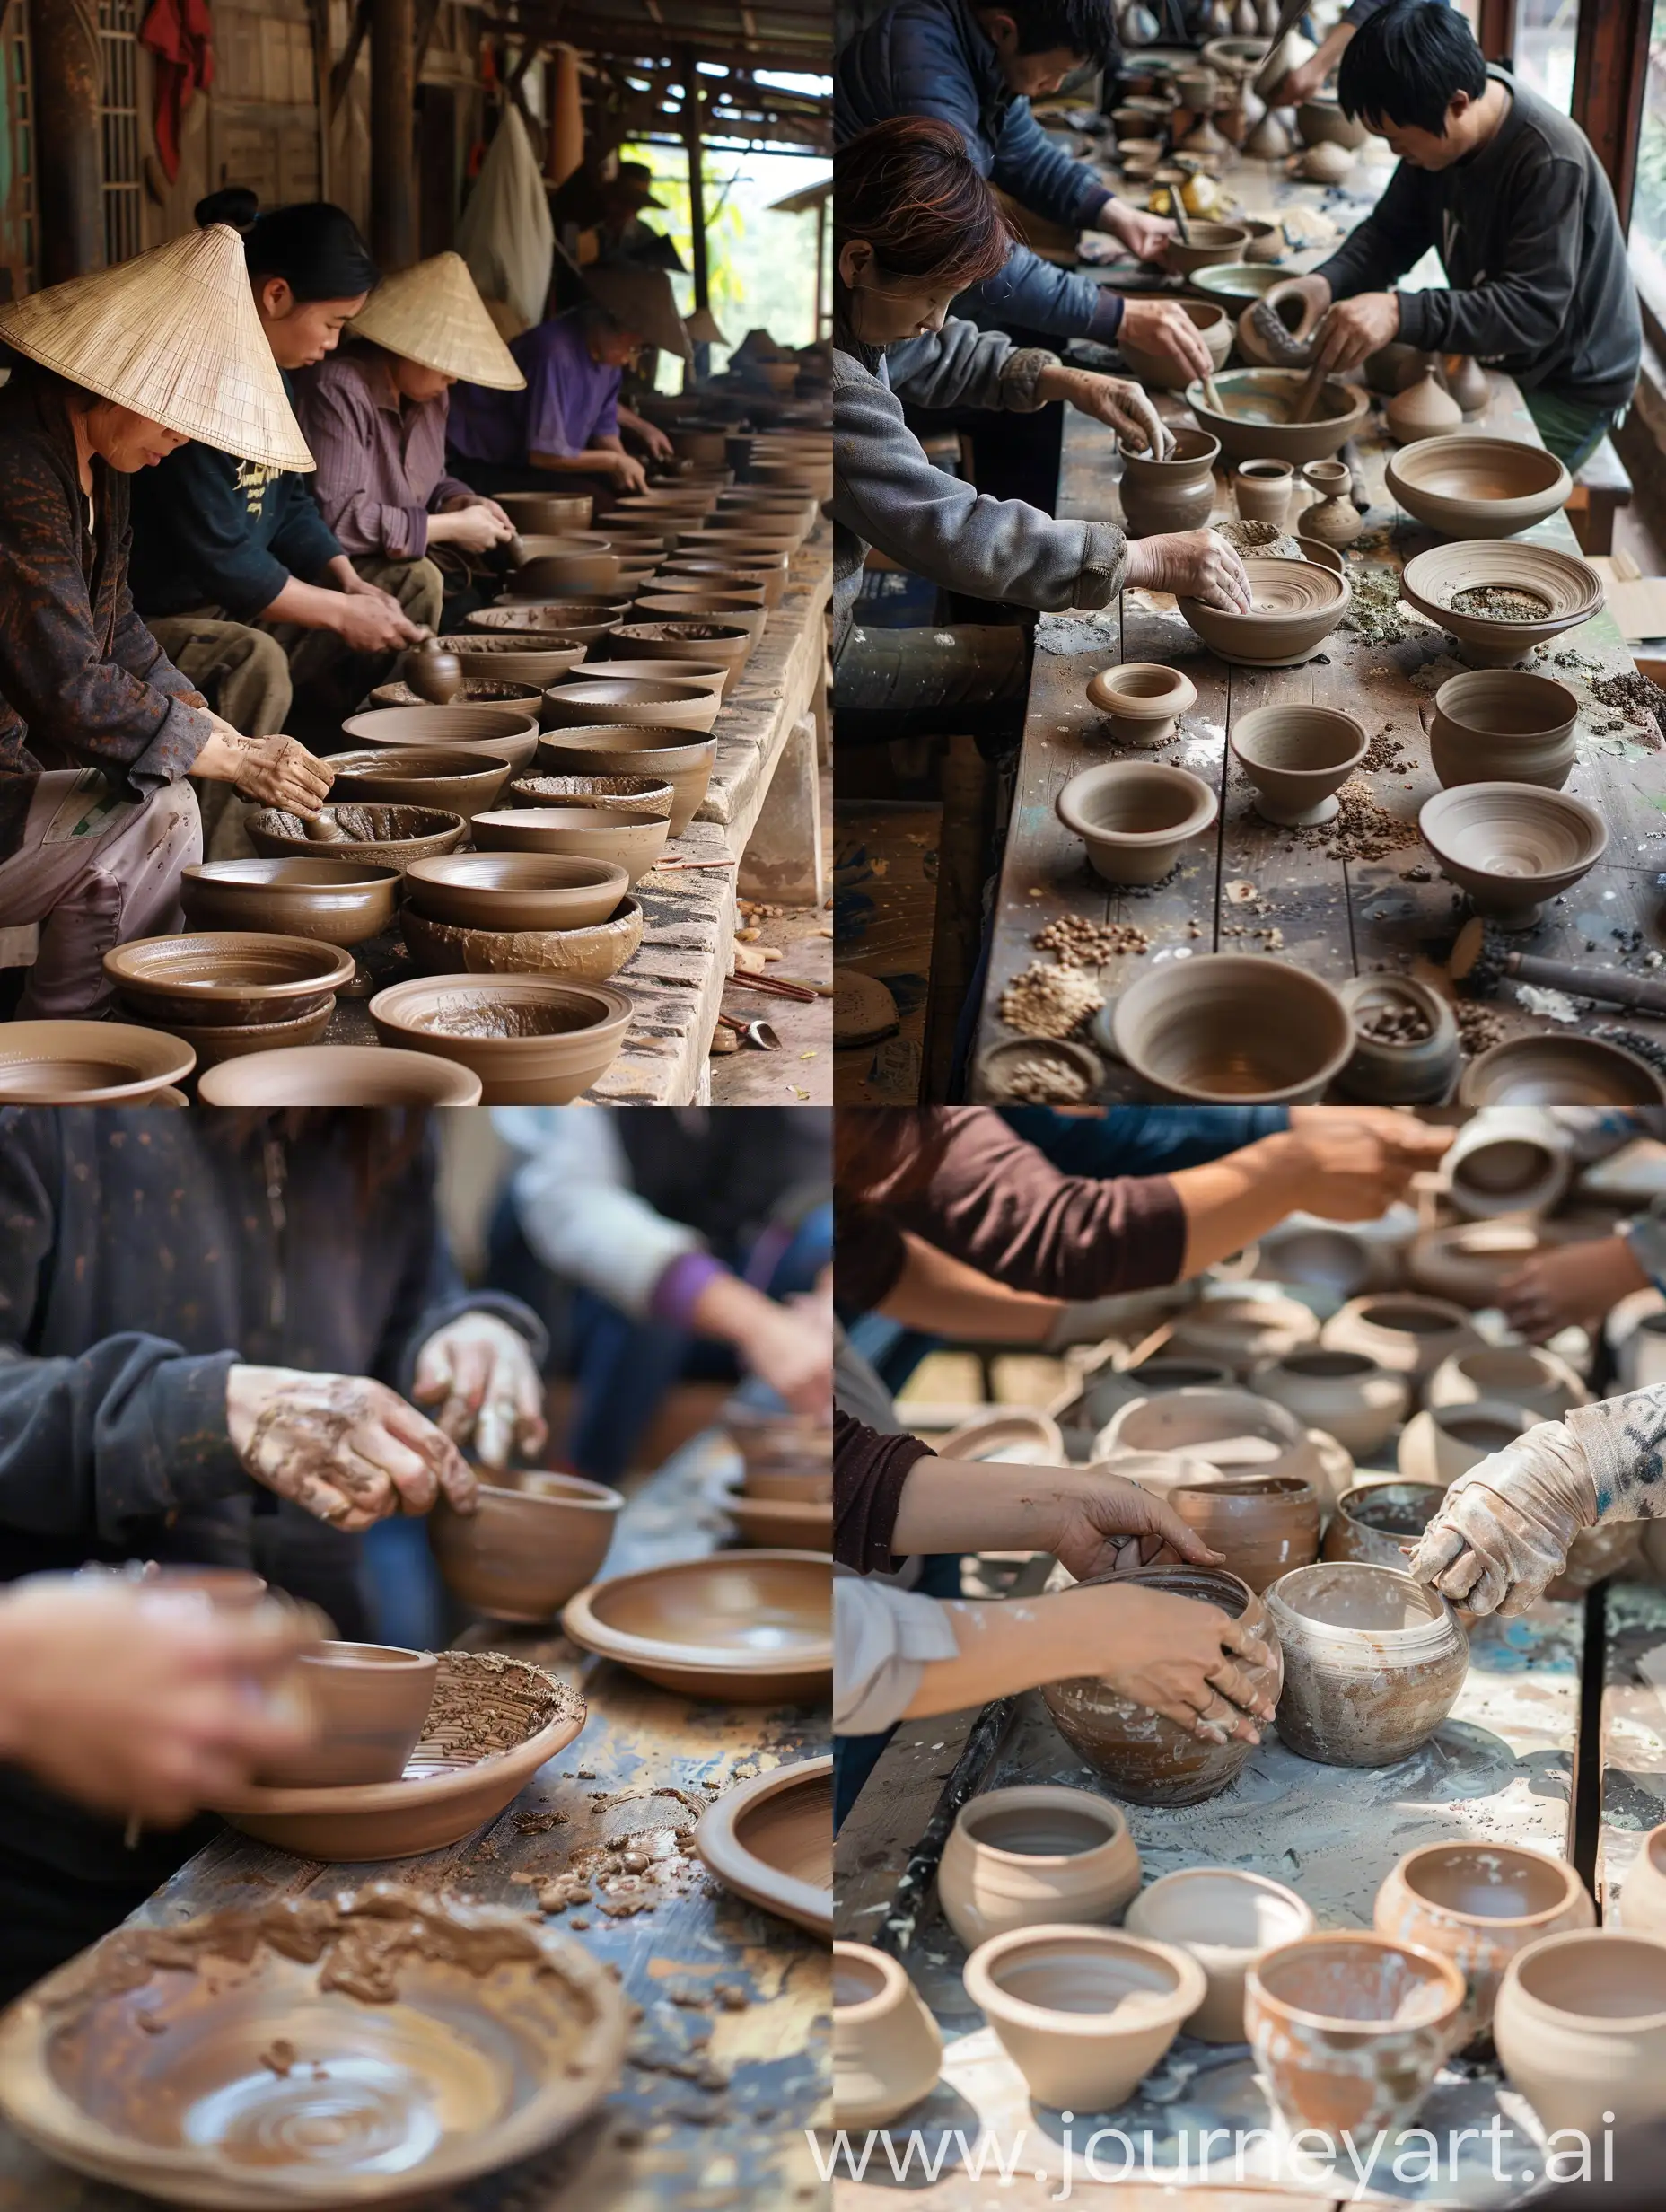 People make pottery